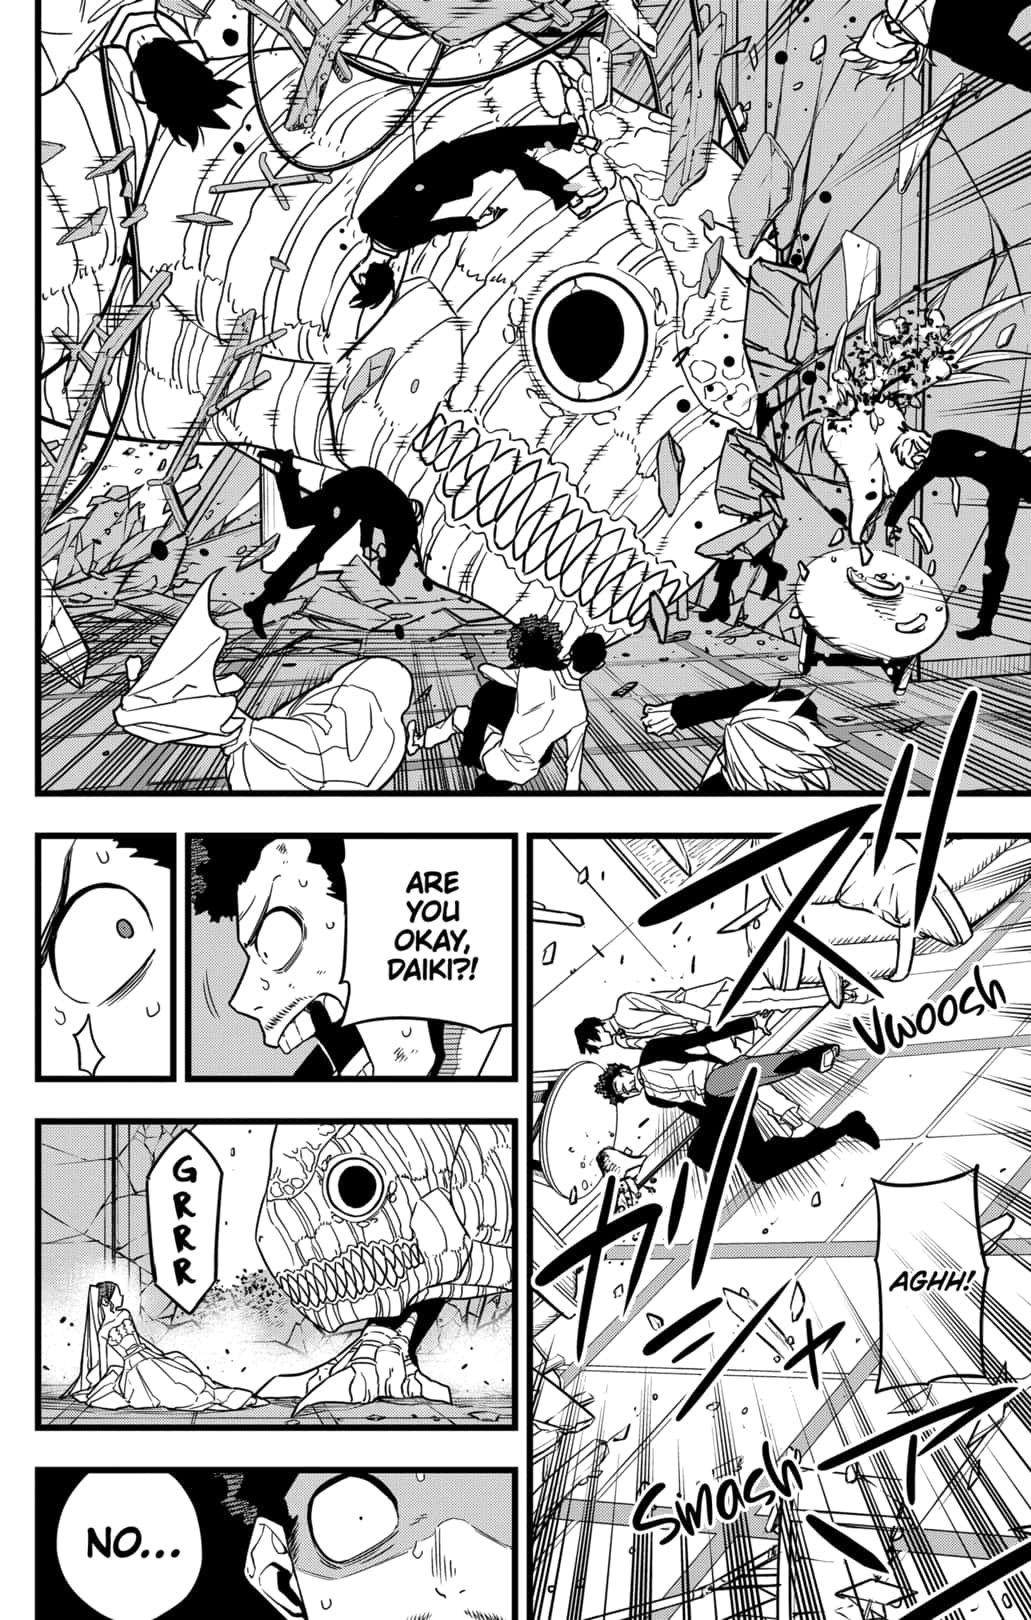 Kaiju No. 8 Chapter 70 page 13 - Mangakakalot